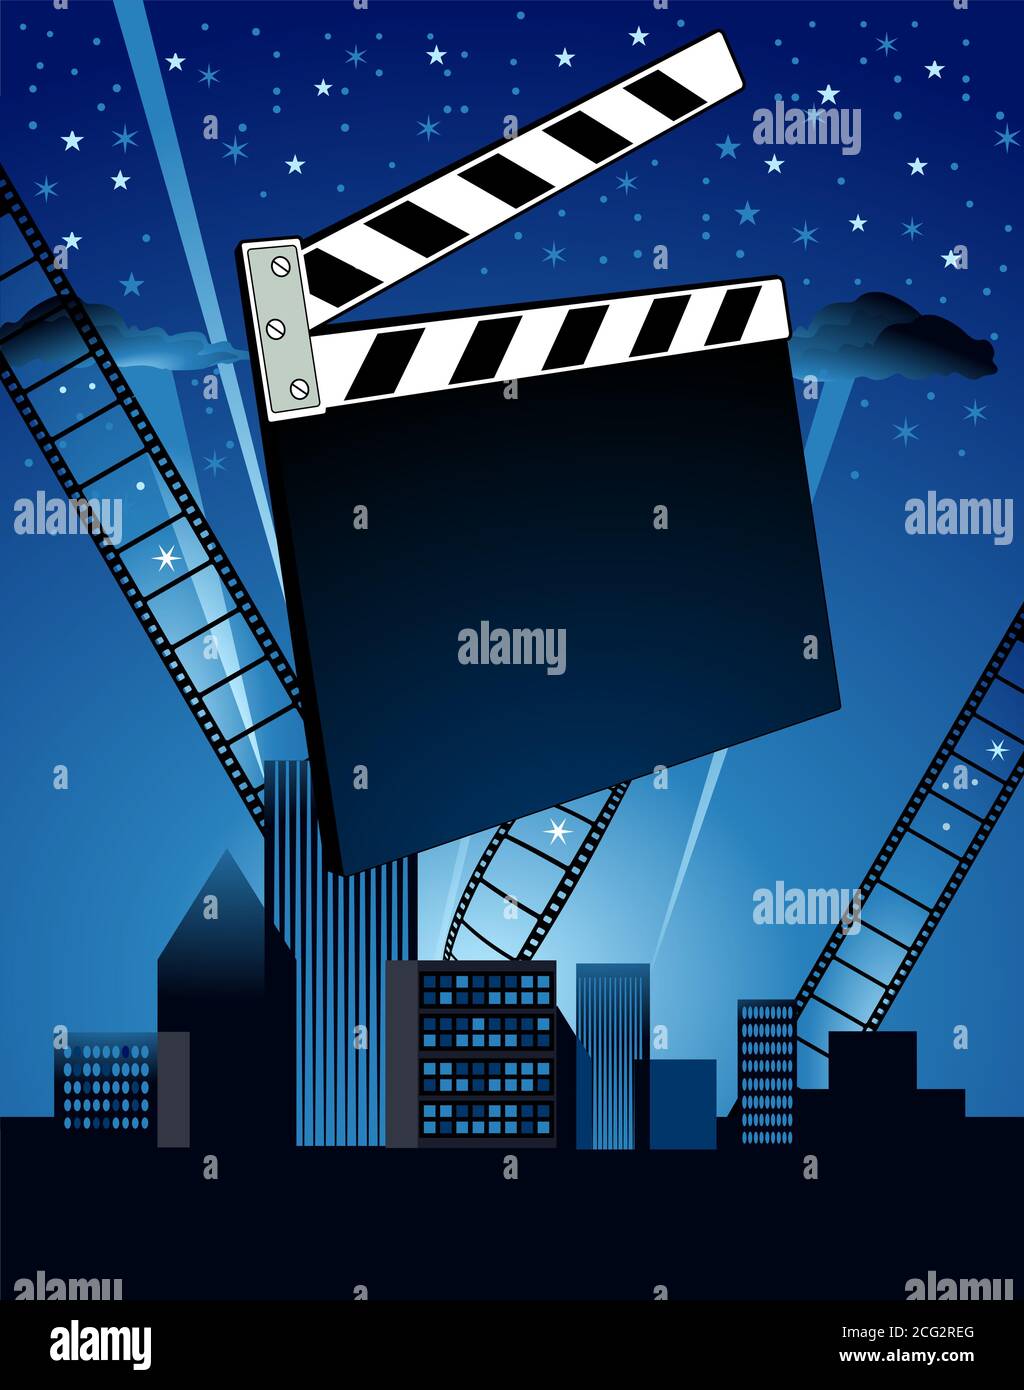 Cinema movie film festival, vector illustration Stock Vector